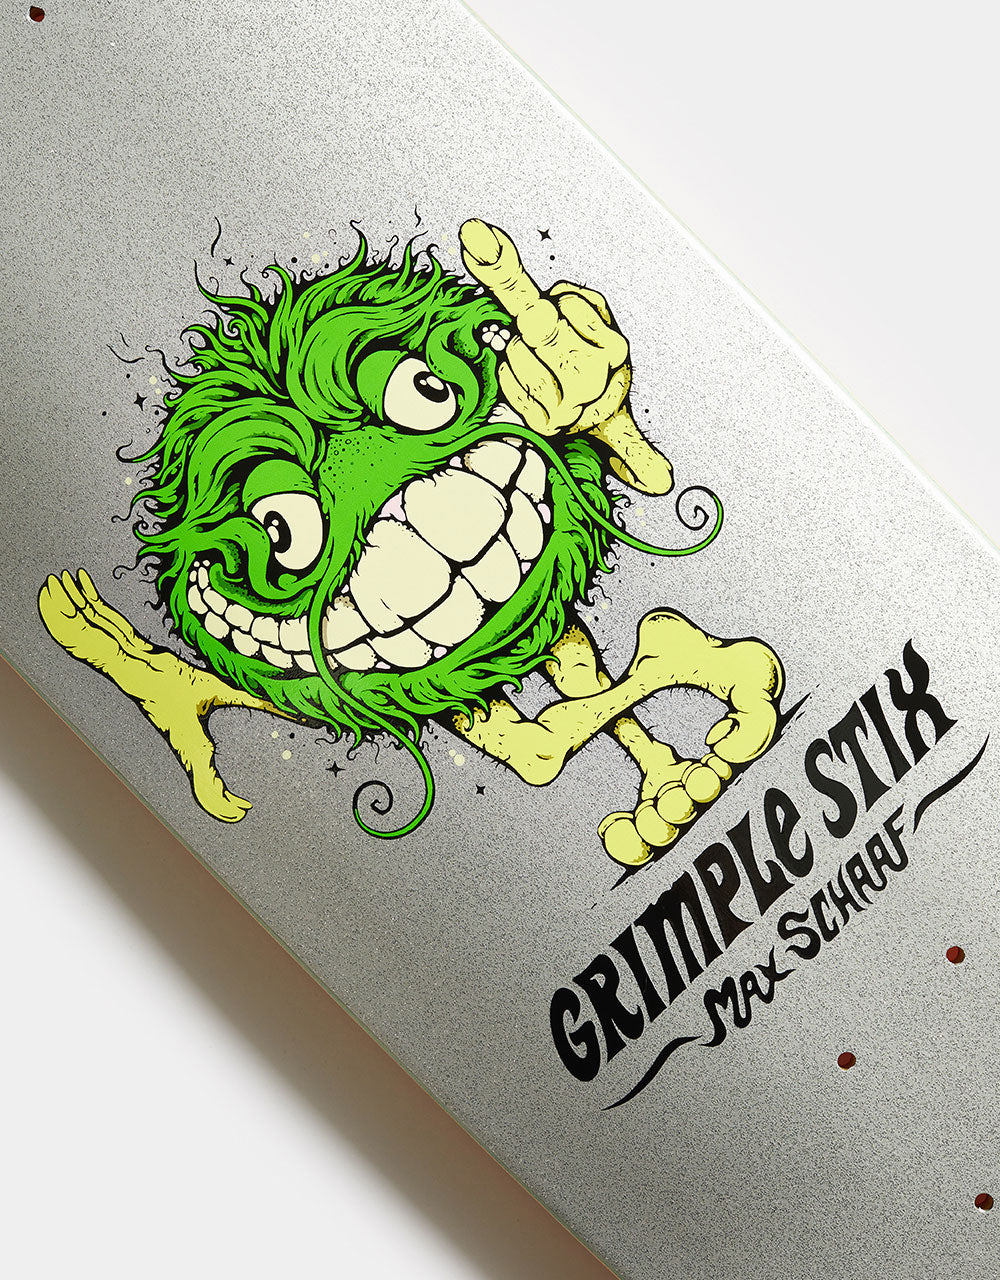 Anti Hero Schaaf Grimple Stix Asphalt Animals Skateboard Deck - 8.75"